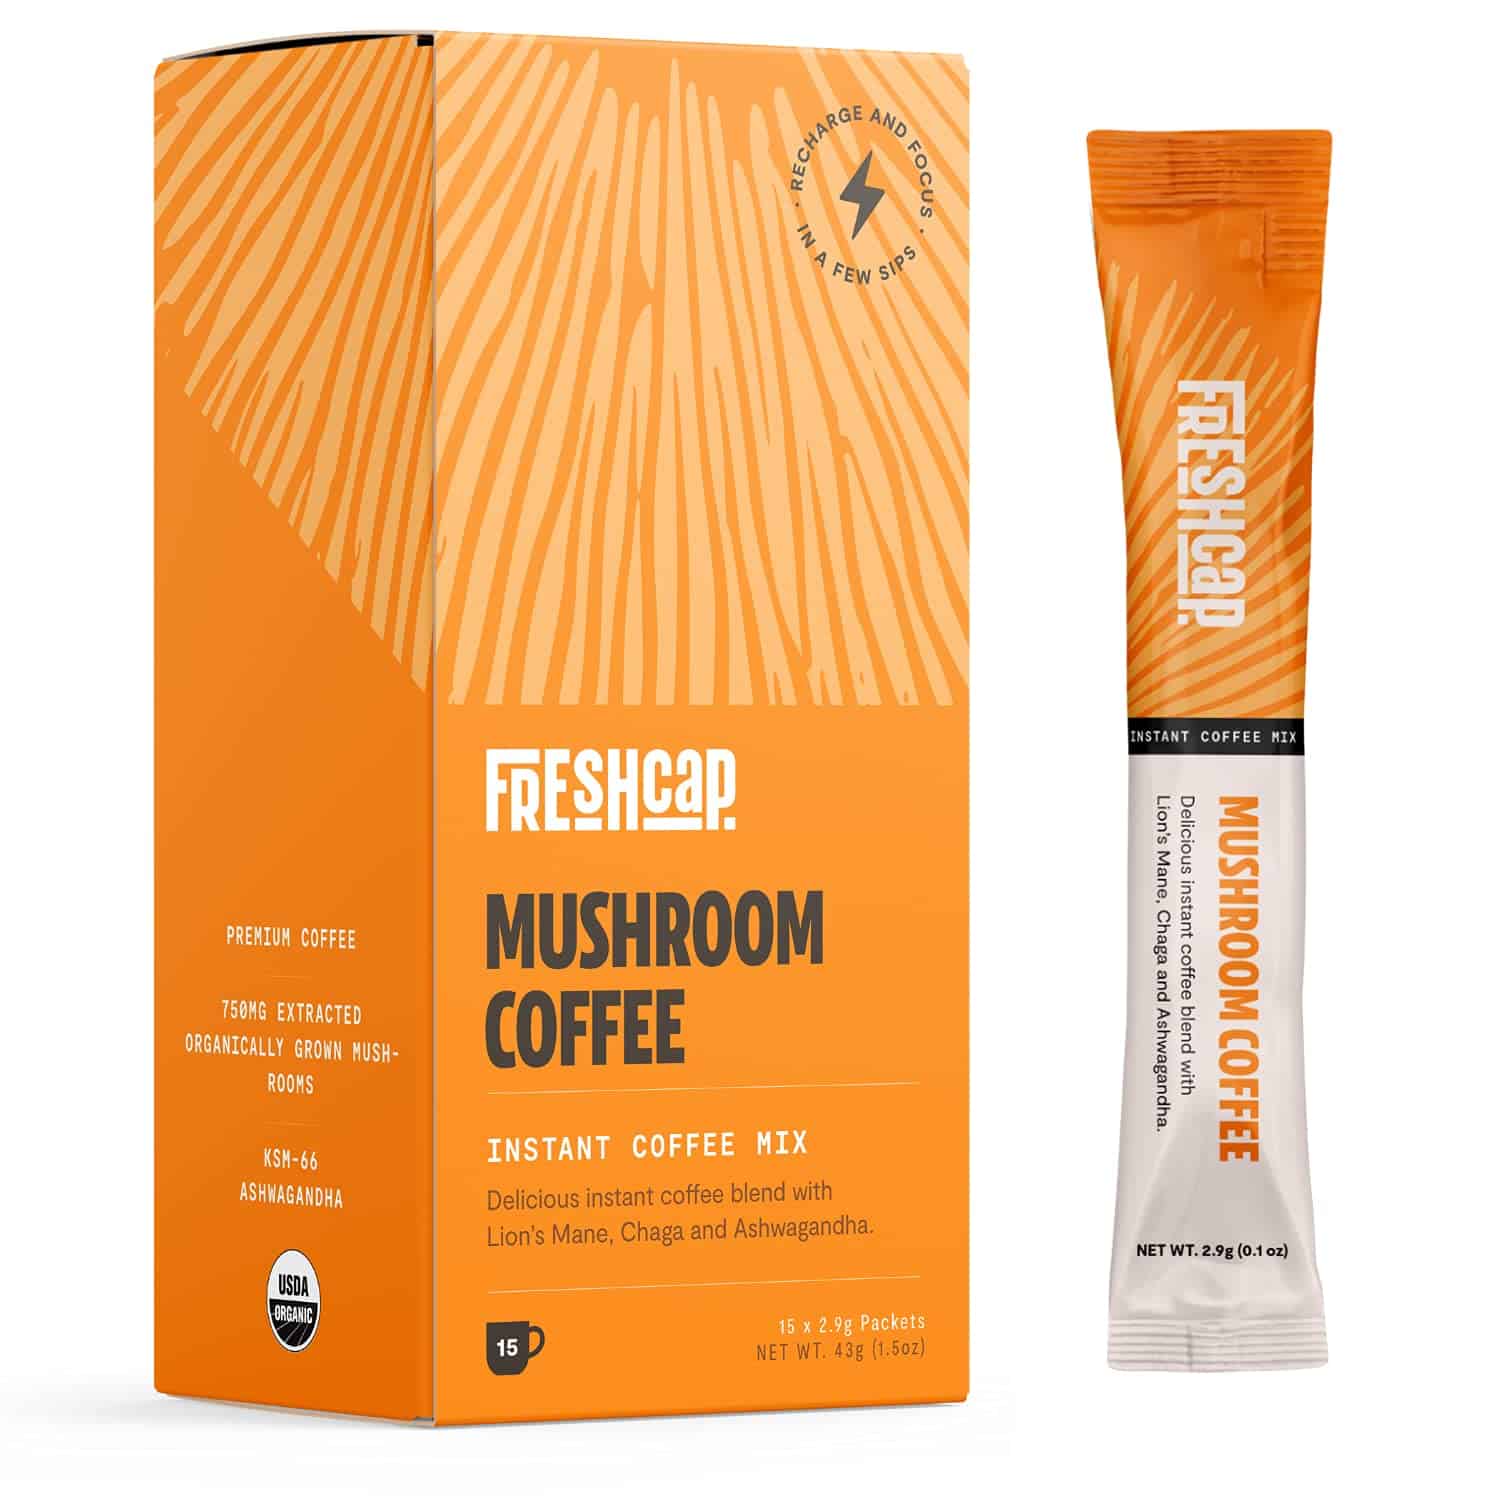 Freshcap mushroom coffee